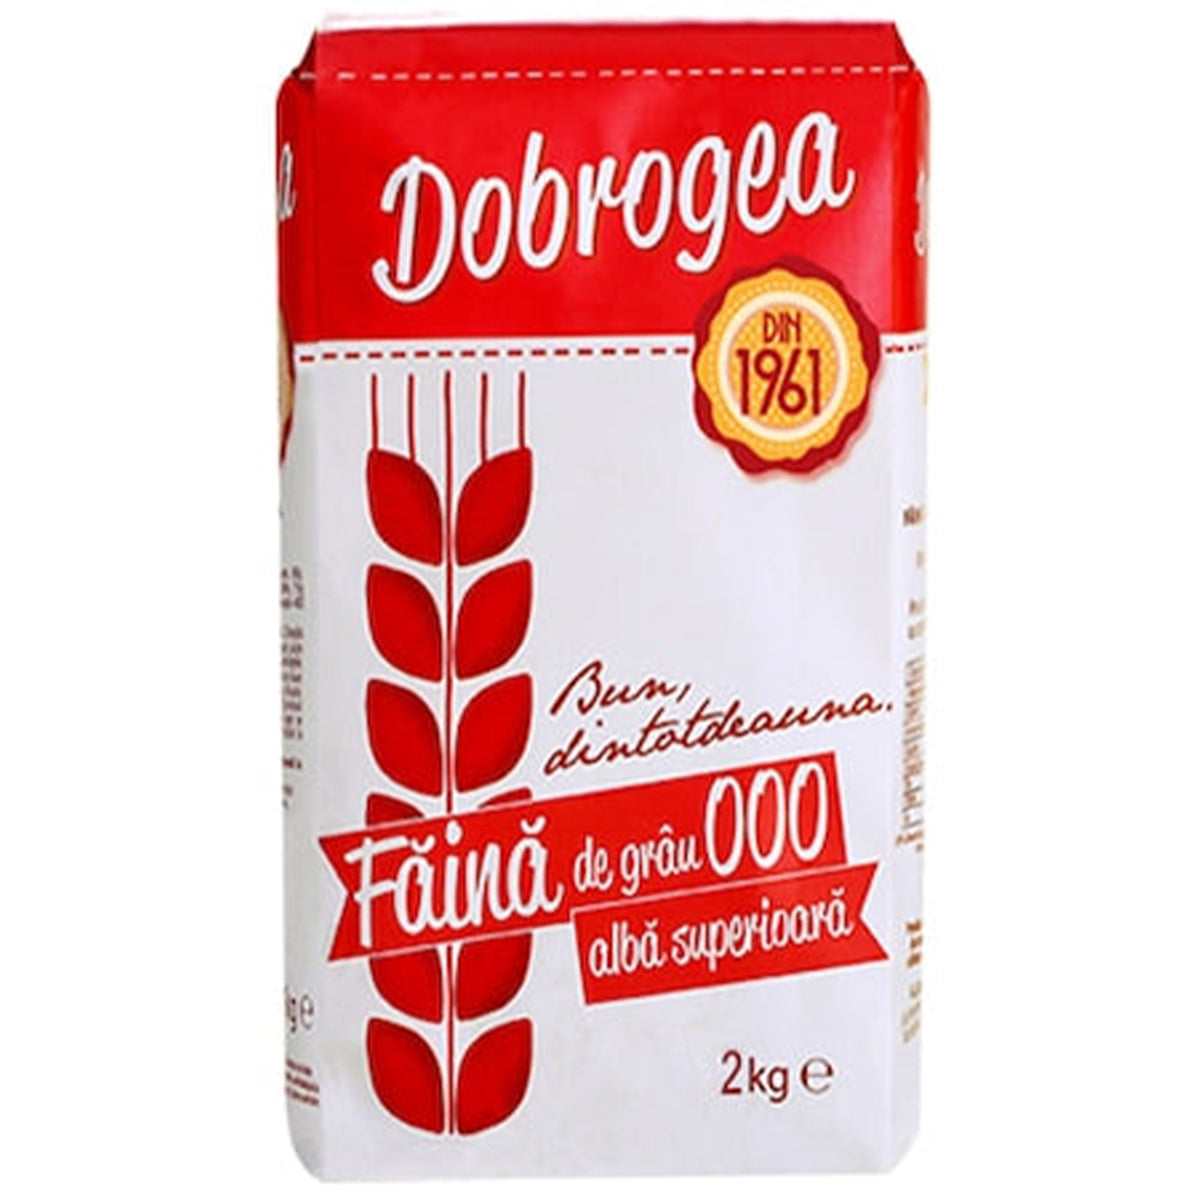 Dobrogea - White Flour - 2kg - Continental Food Store